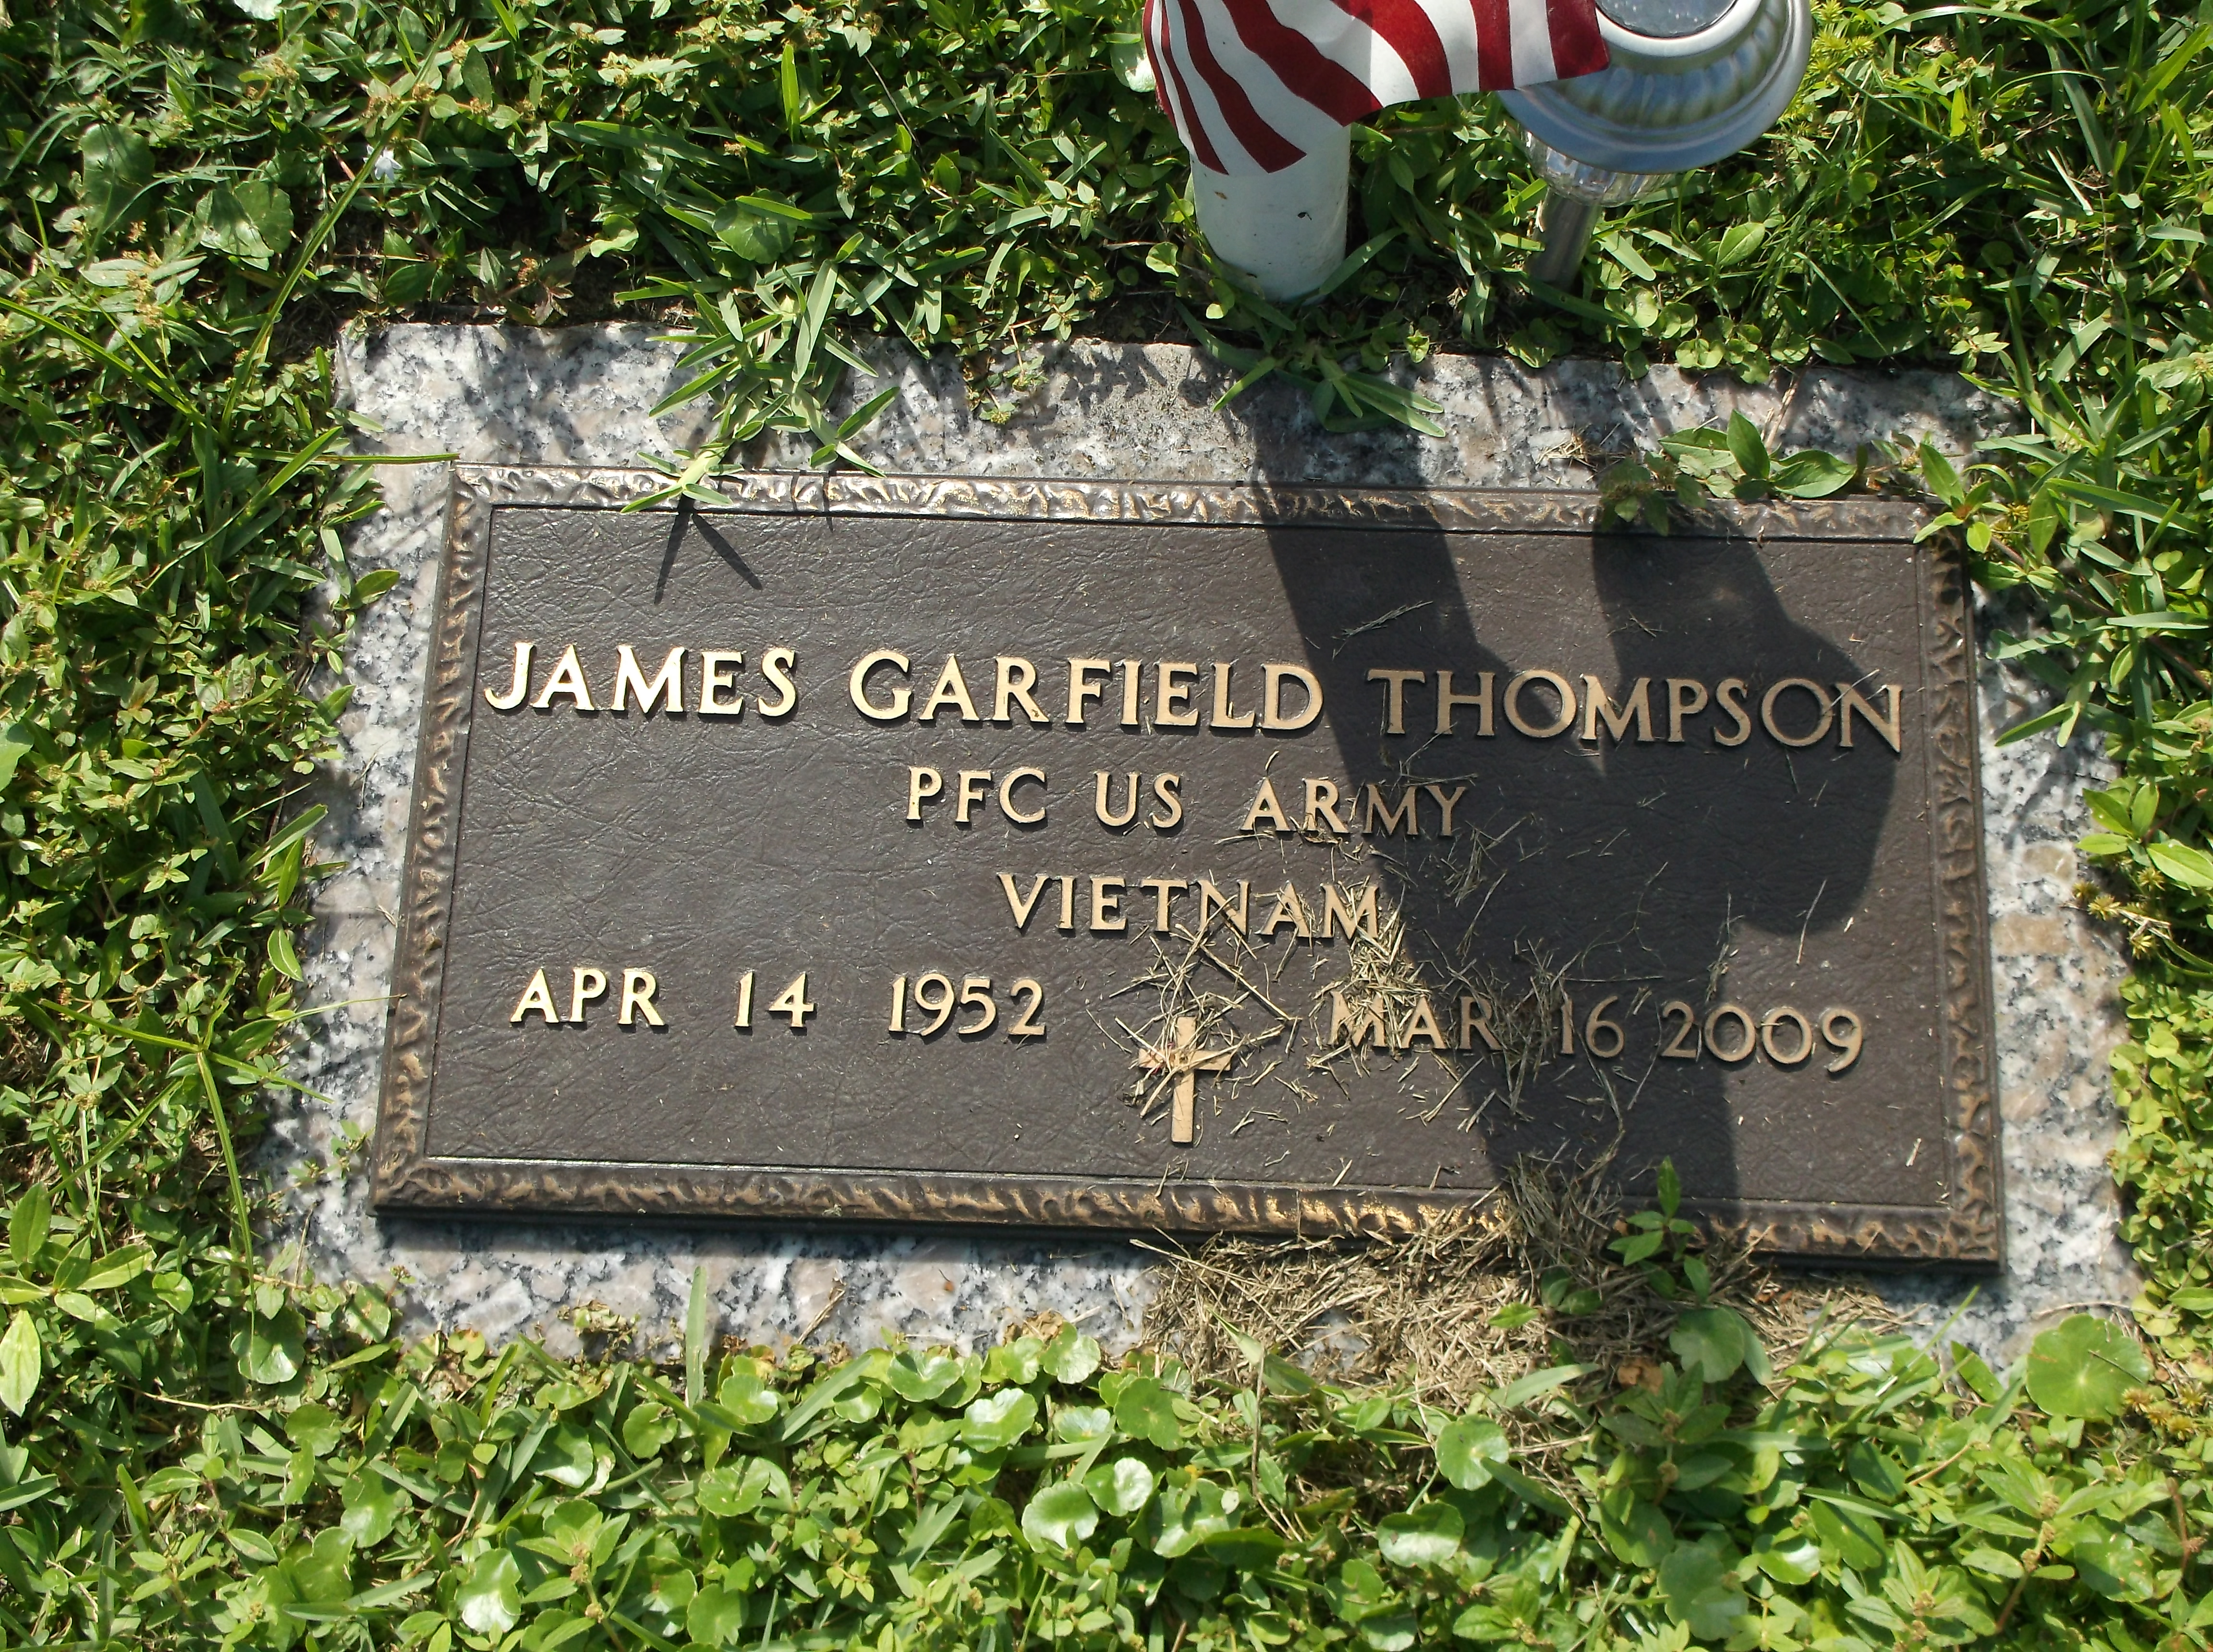 James Garfield Thompson